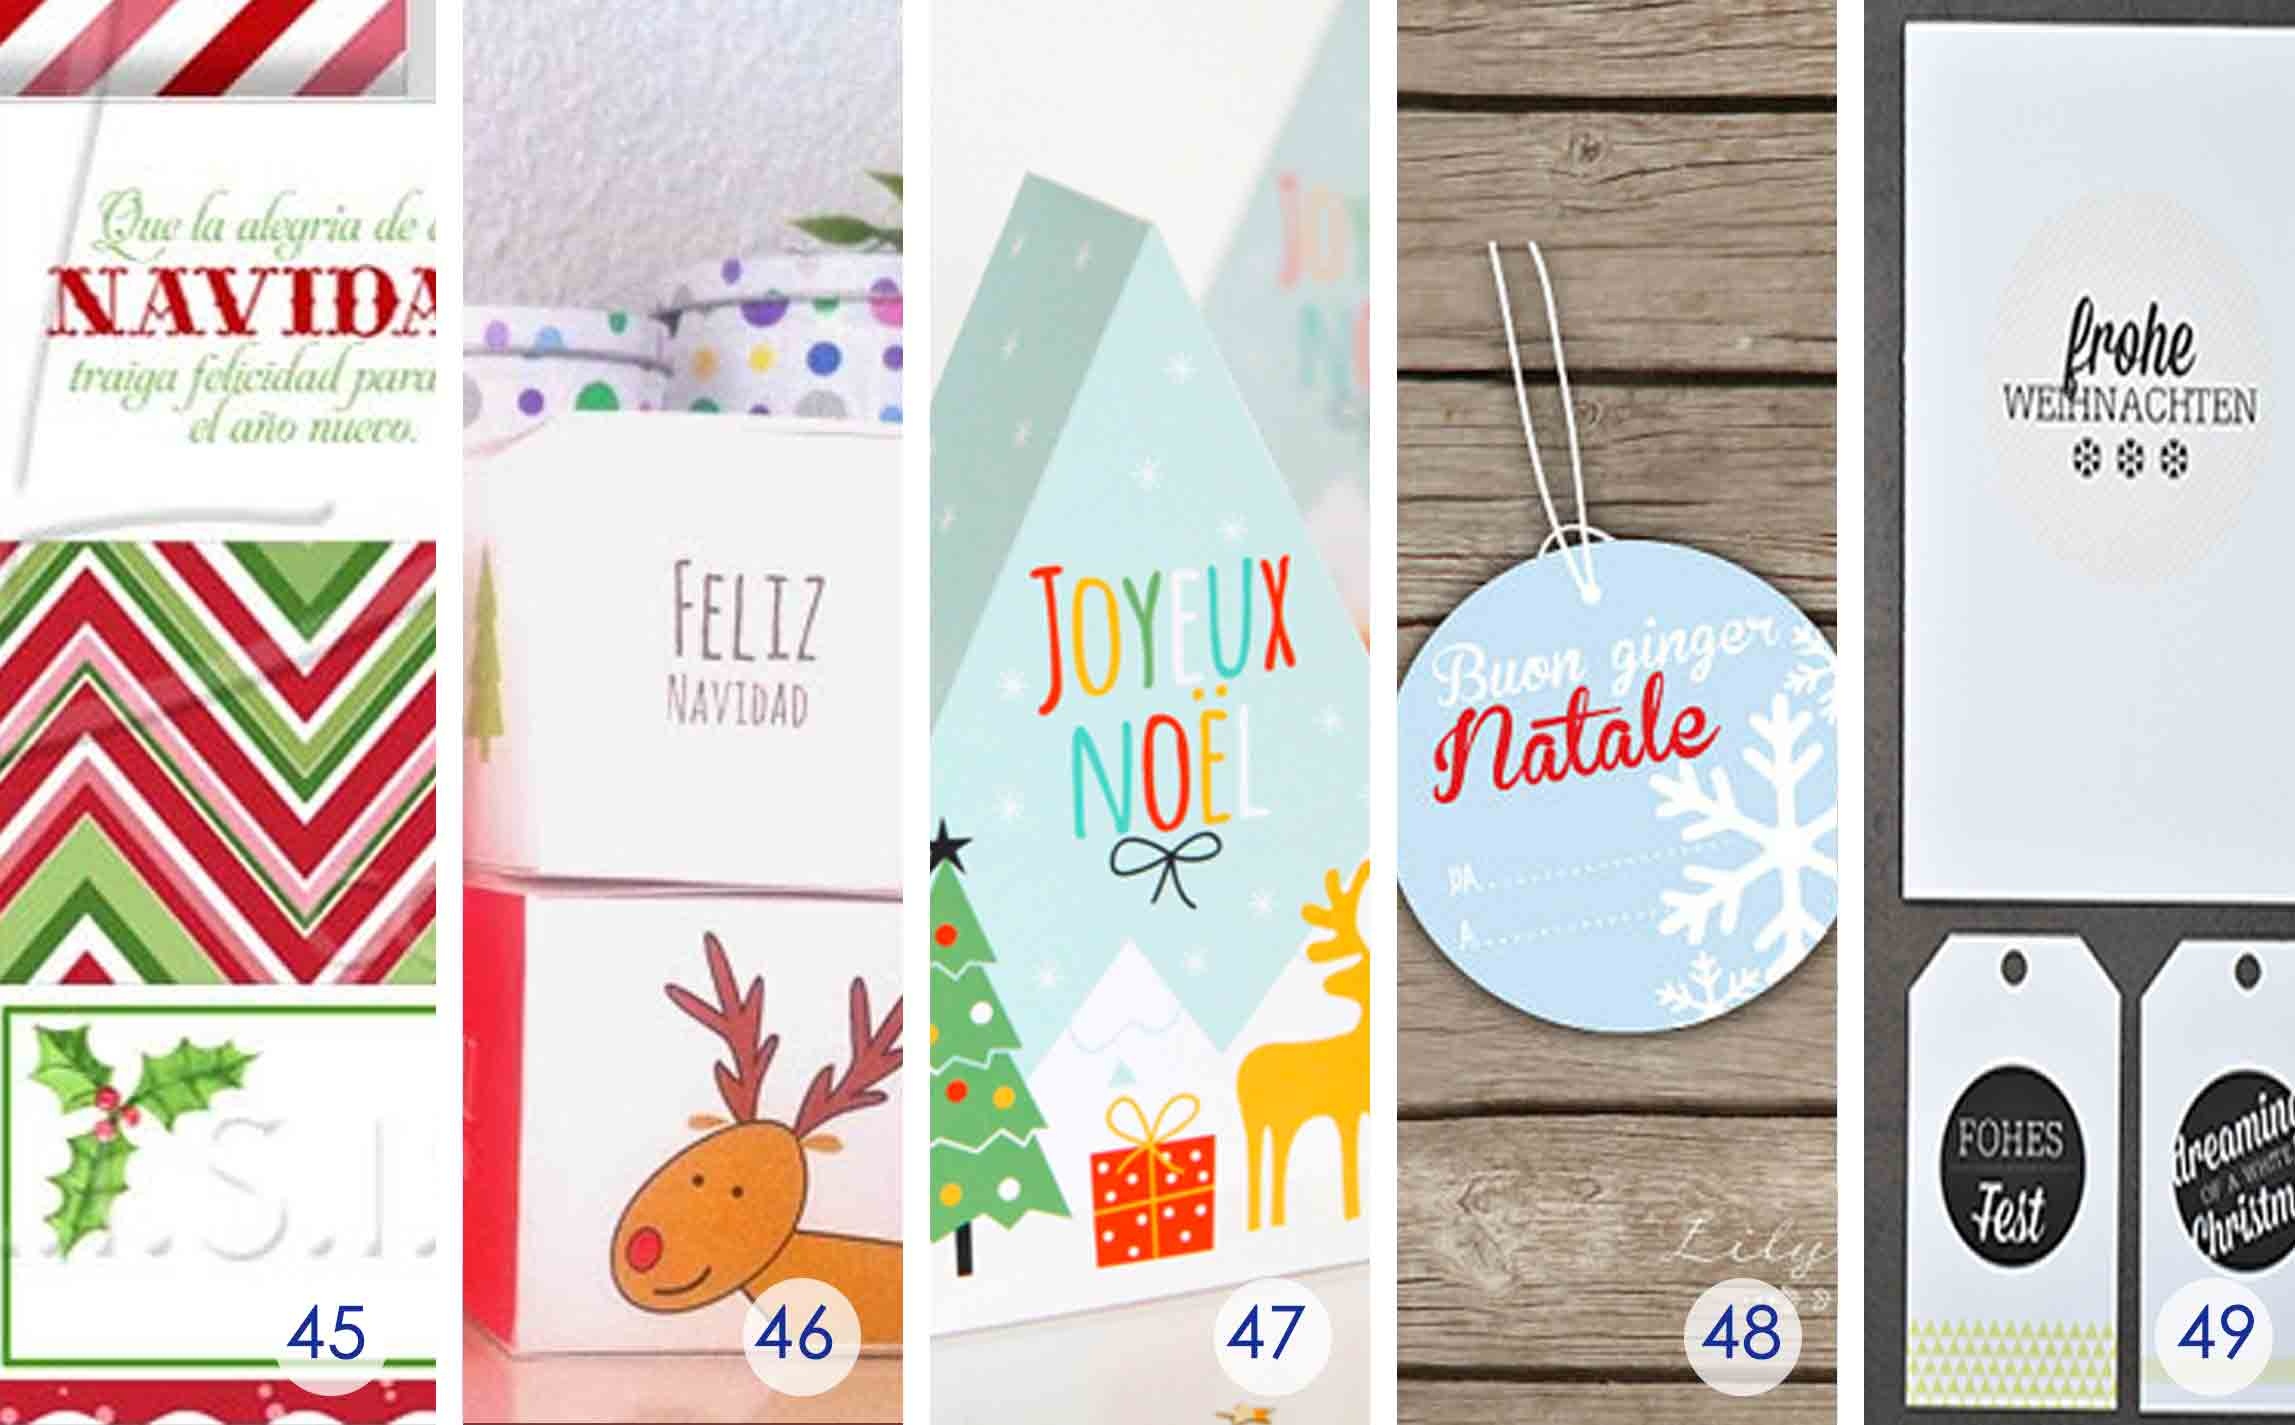 Over 50 Printable Gift Card Holders For The Holidays | Gcg - Free Printable Christmas Money Holder Cards